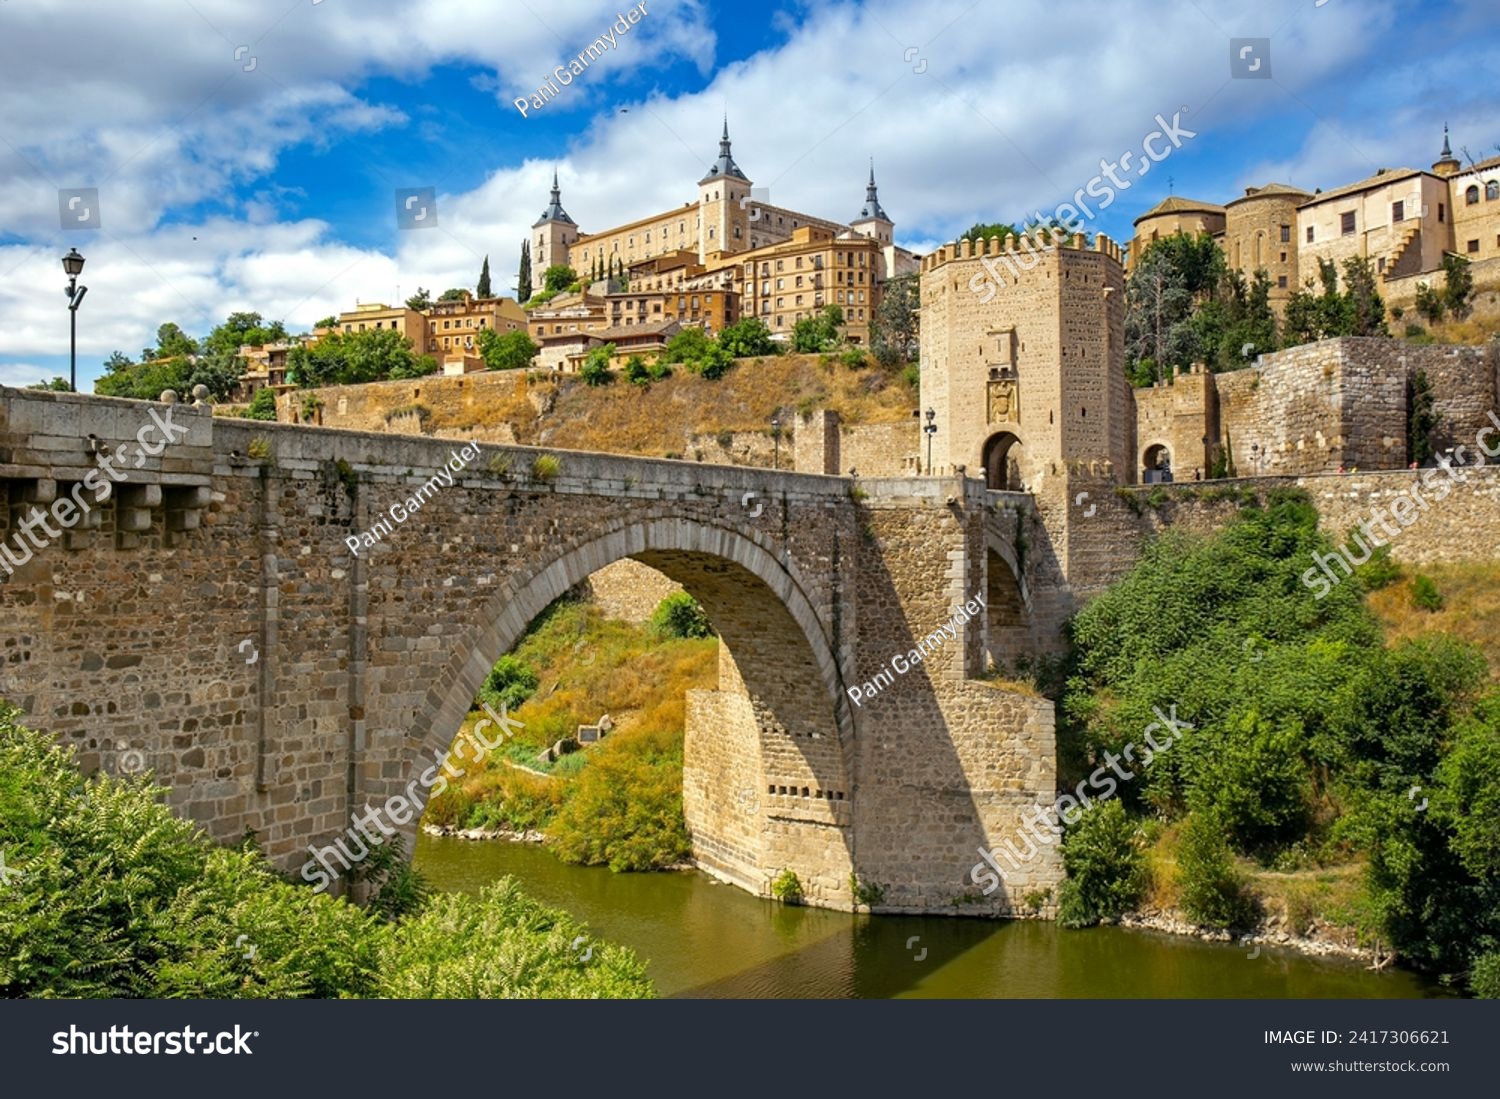 Cityscape of Toledo with the Alcantara bridge in the forefront, Toledo, Spain #2417306621